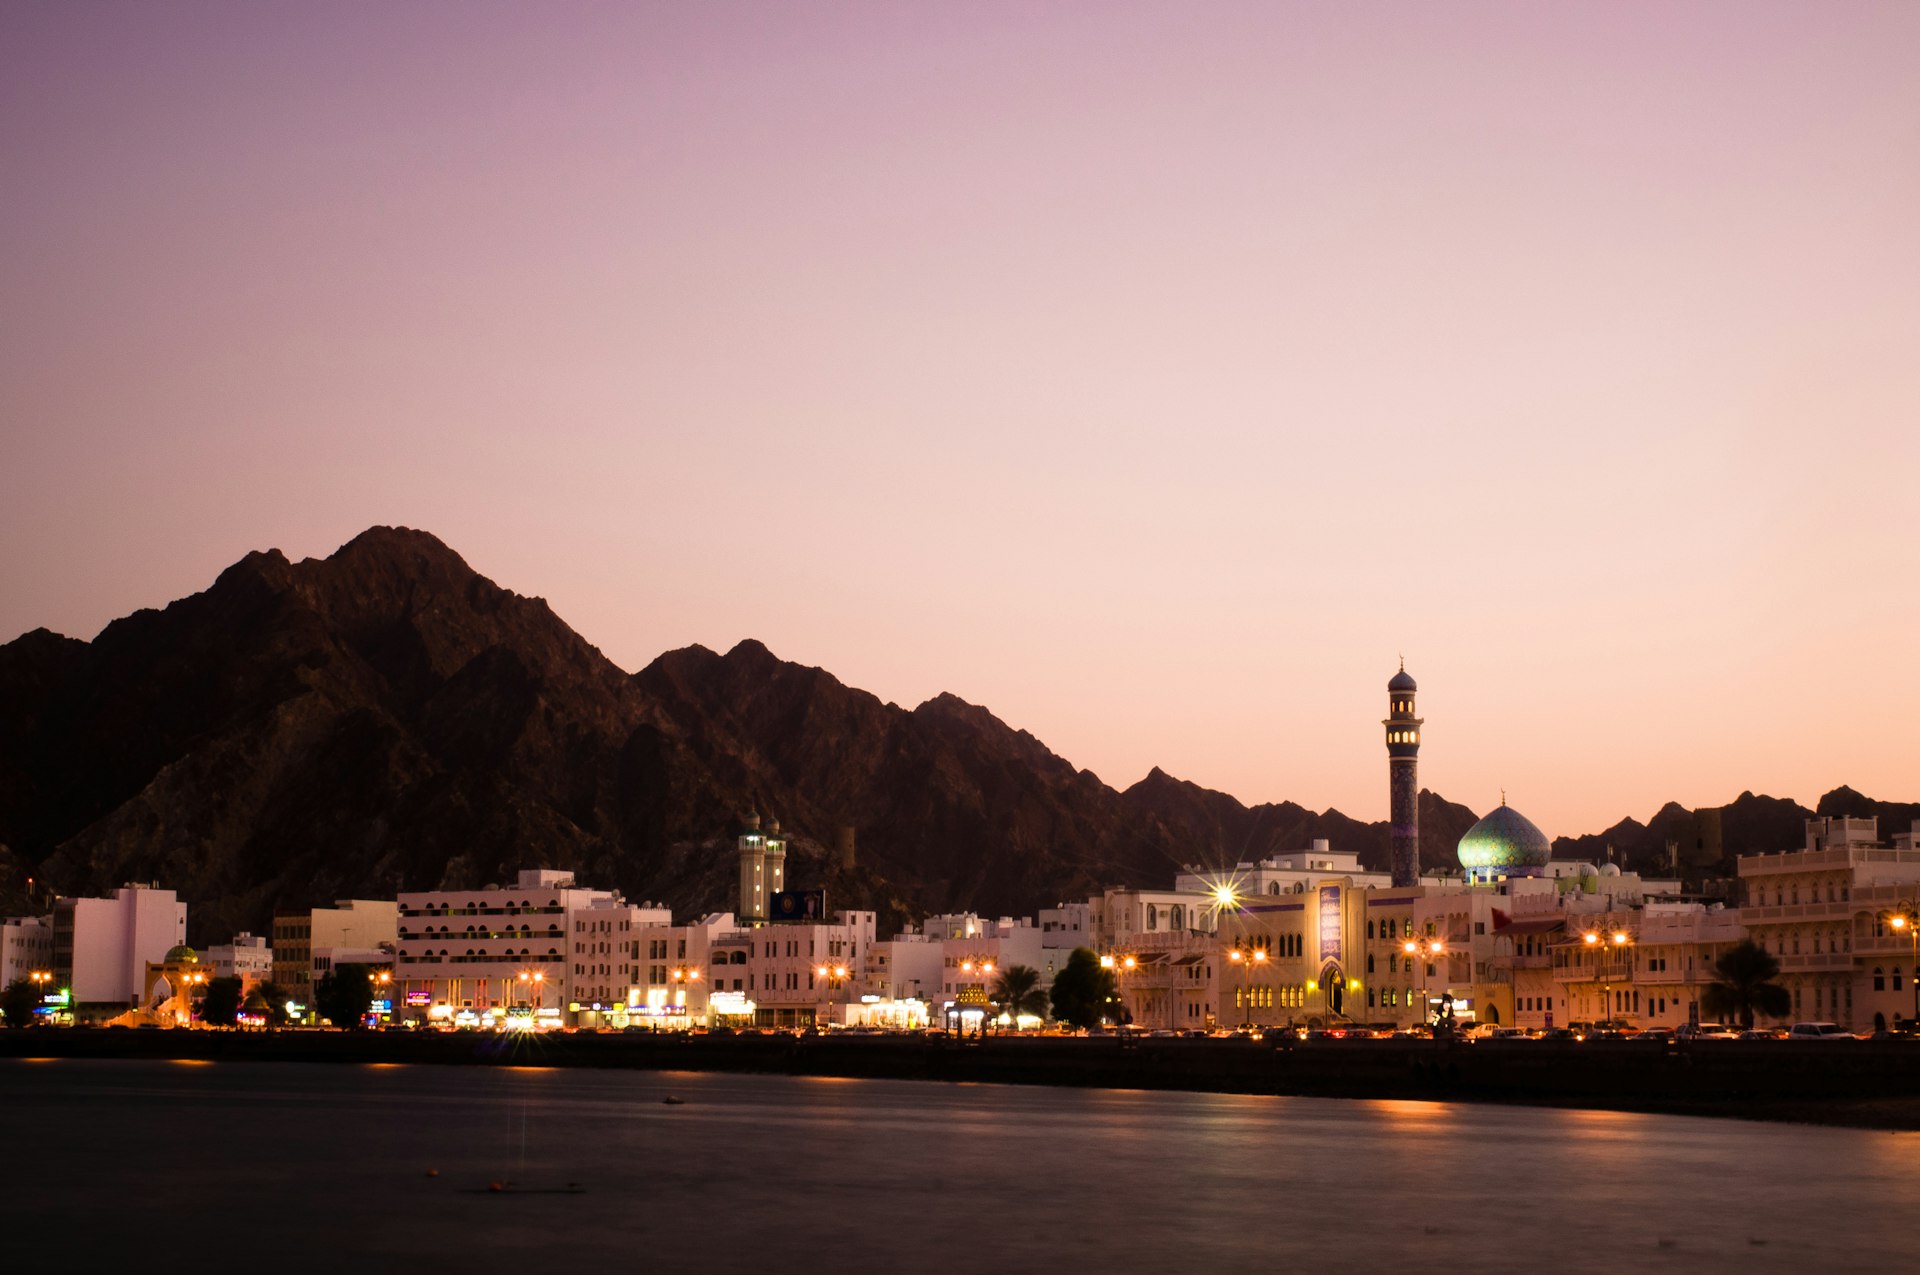 The Corniche waterfront in Muscat, Oman